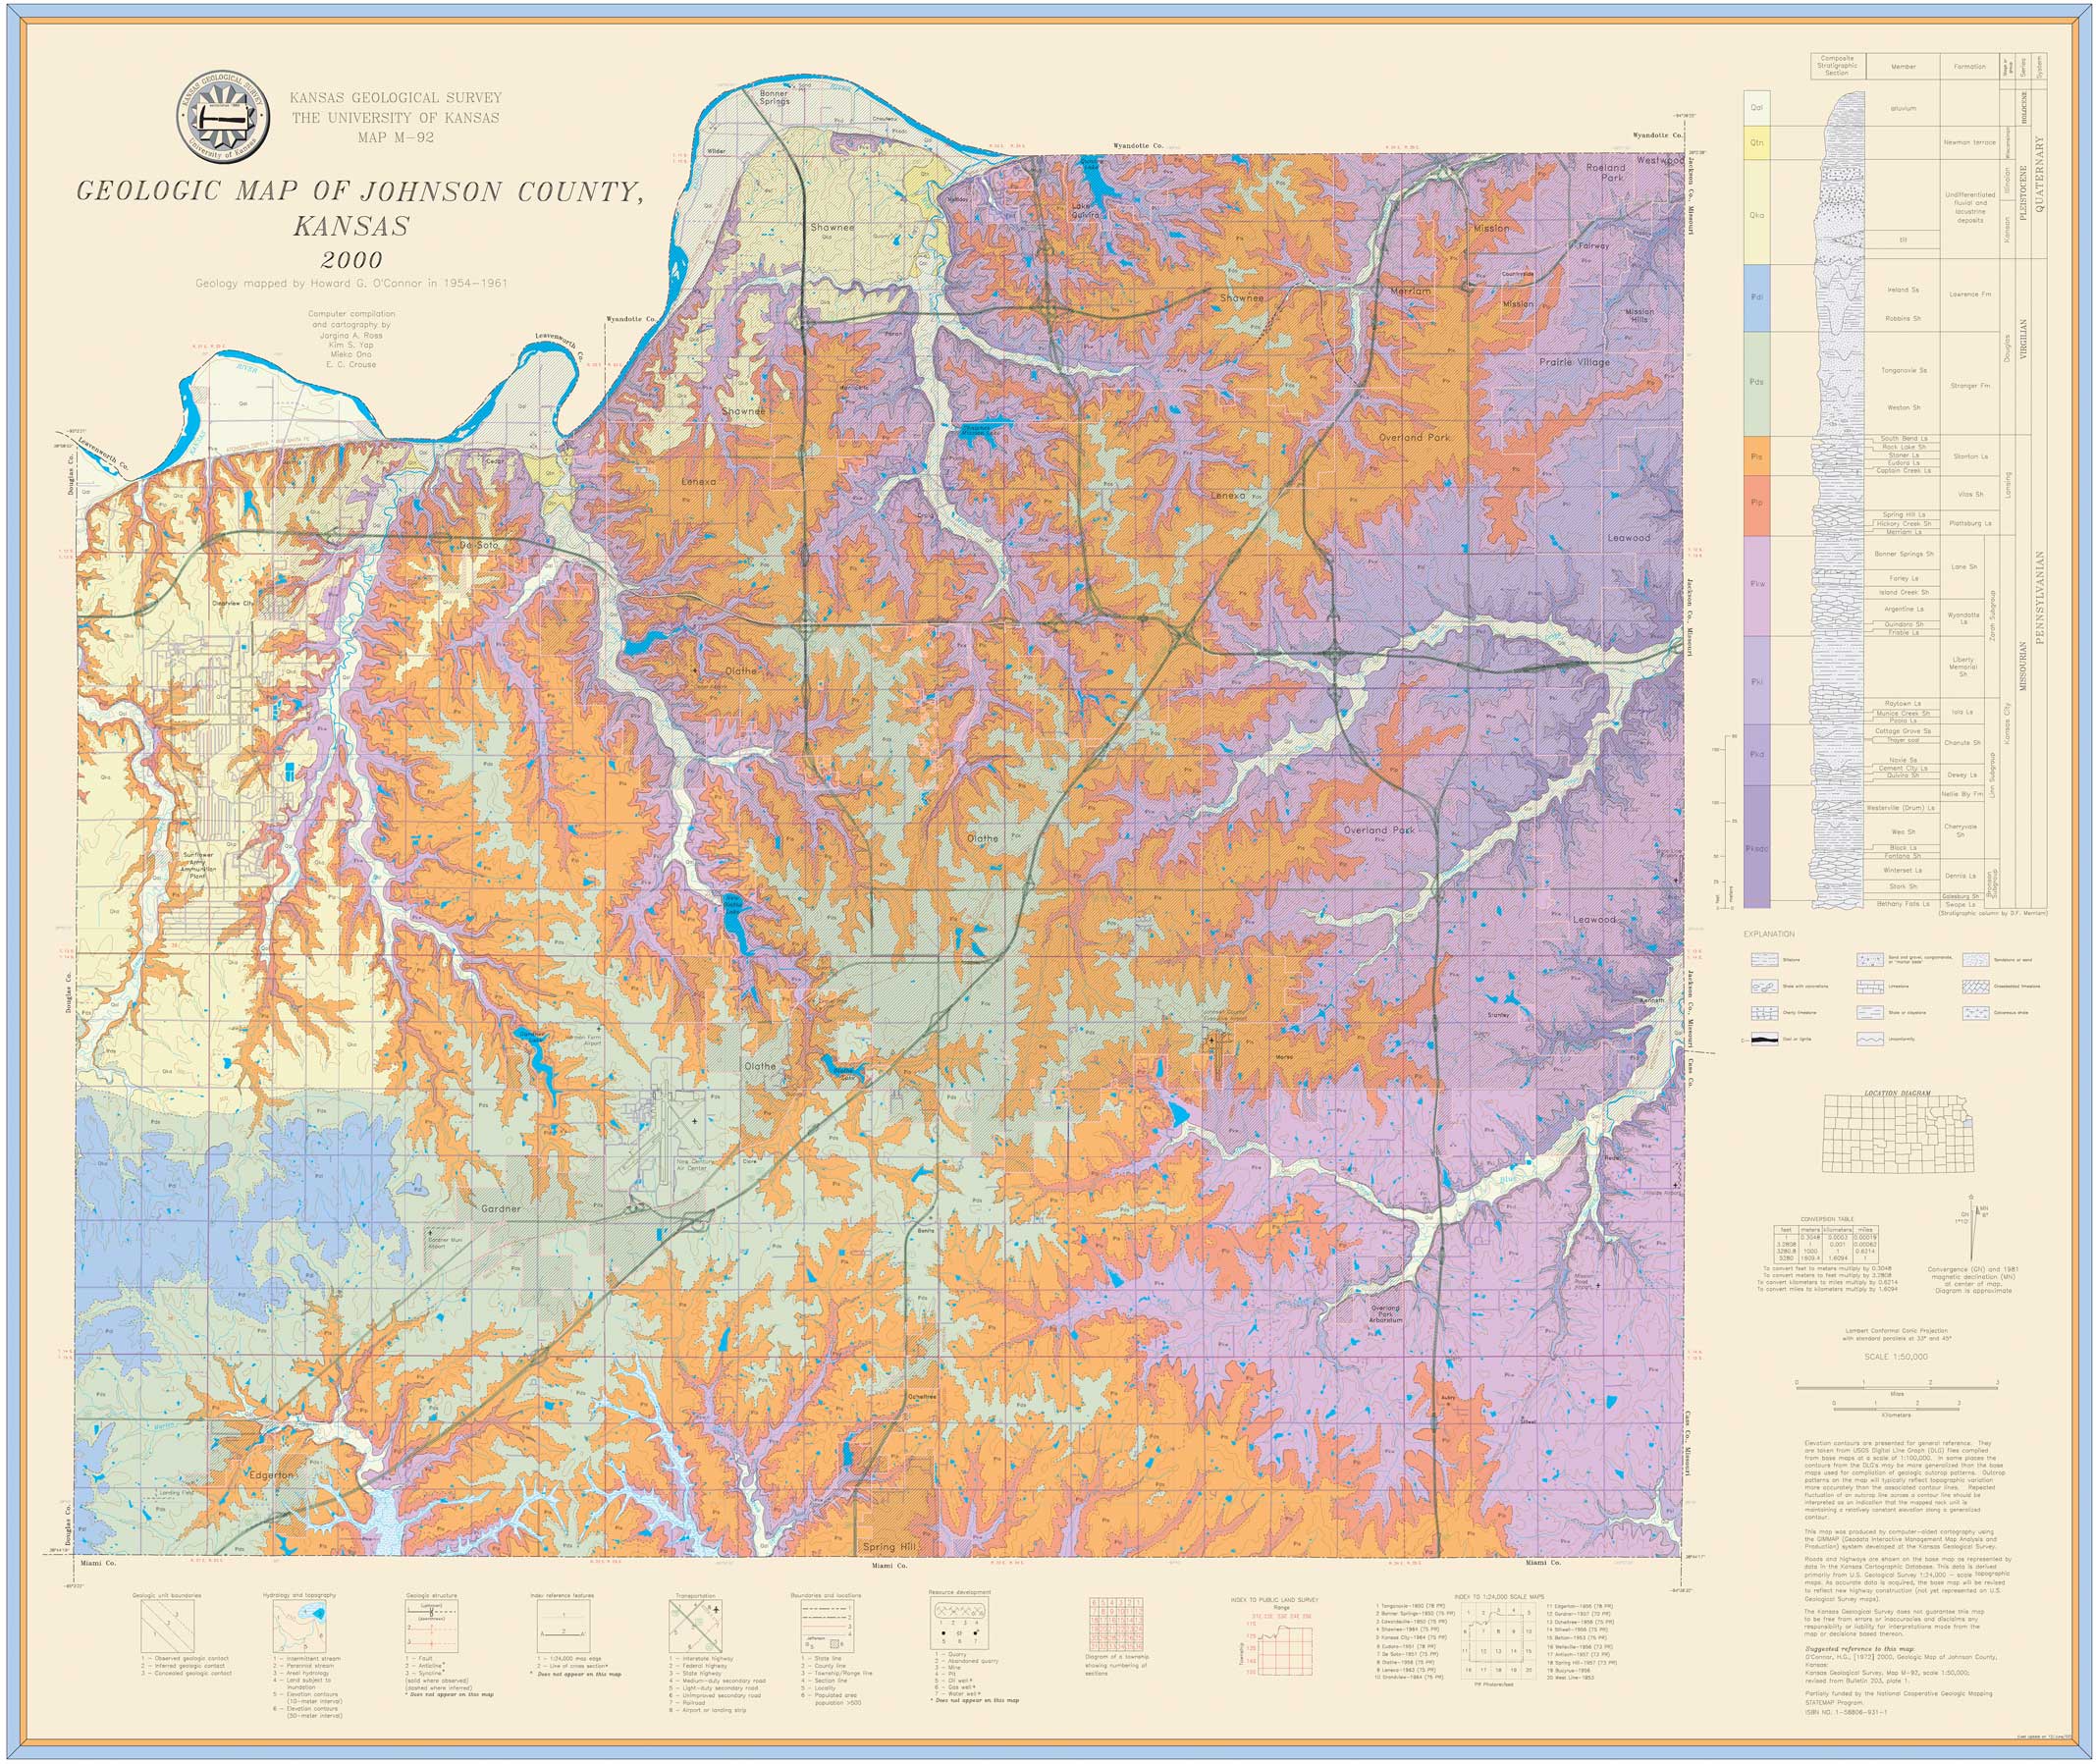 Johnson County geologic map